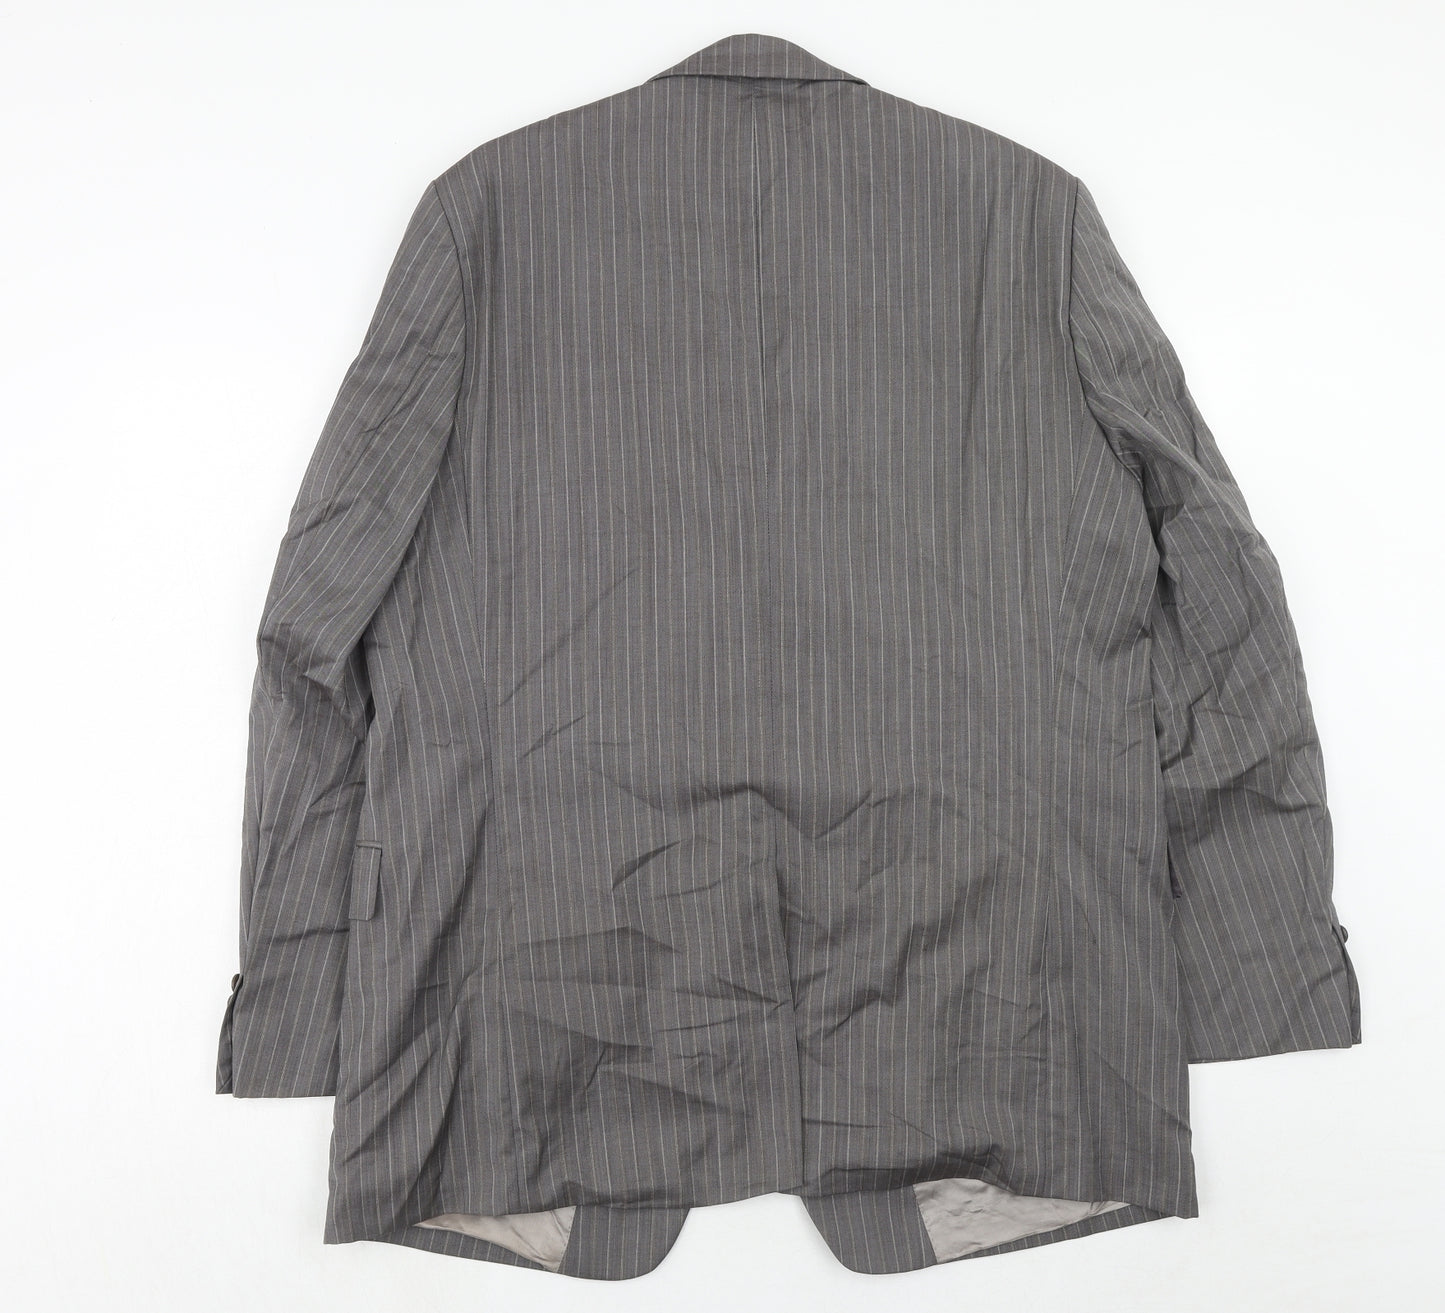 Van Gils Mens Grey Striped Wool Jacket Suit Jacket Size 46 Regular